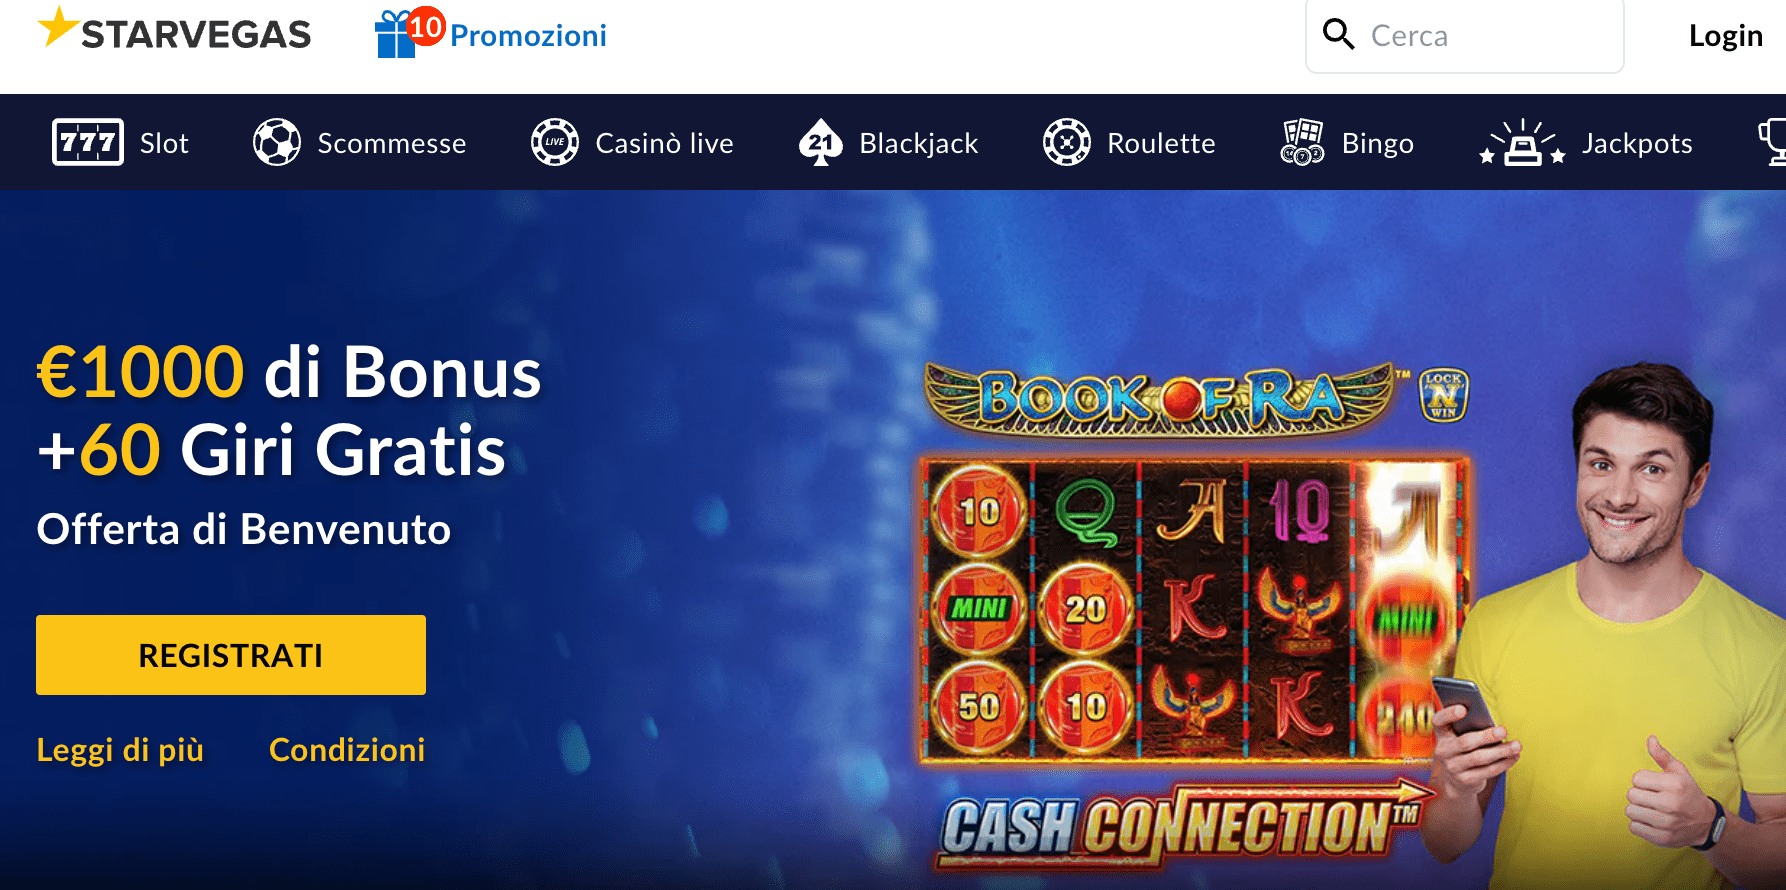 casino online starvegas